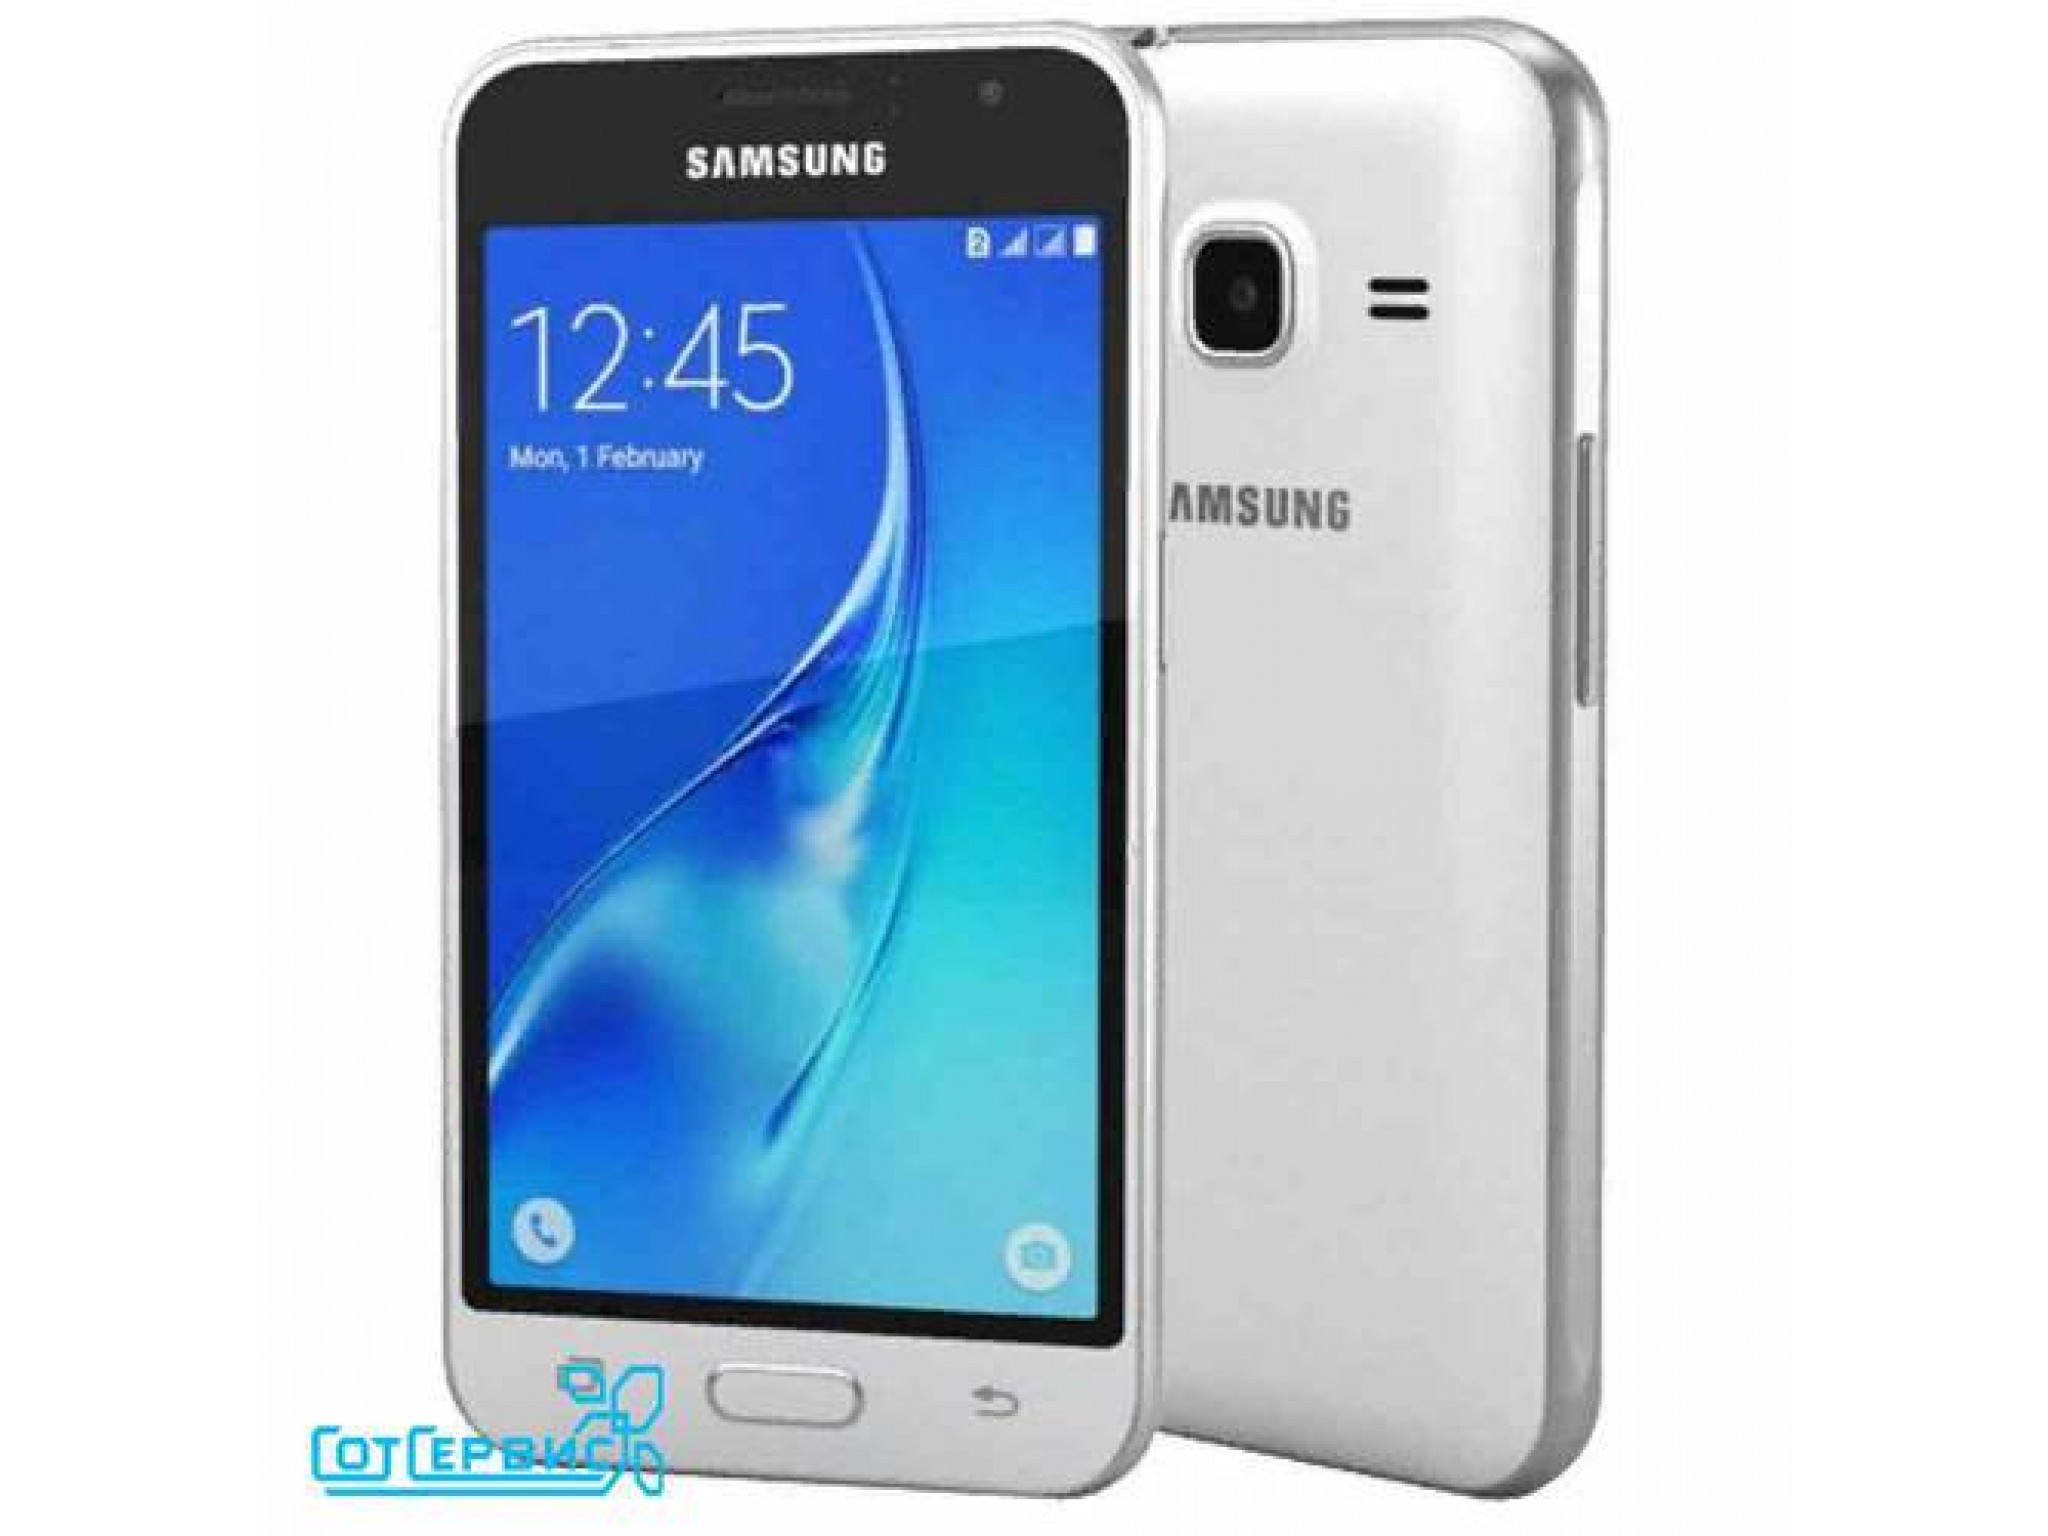 Купить галакси j1. Samsung j1 6. Samsung Galaxy j1 Mini SM-j105h. Samsung Galaxy j1 2016. Samsung Galaxy j1 2016 SM-j120f.